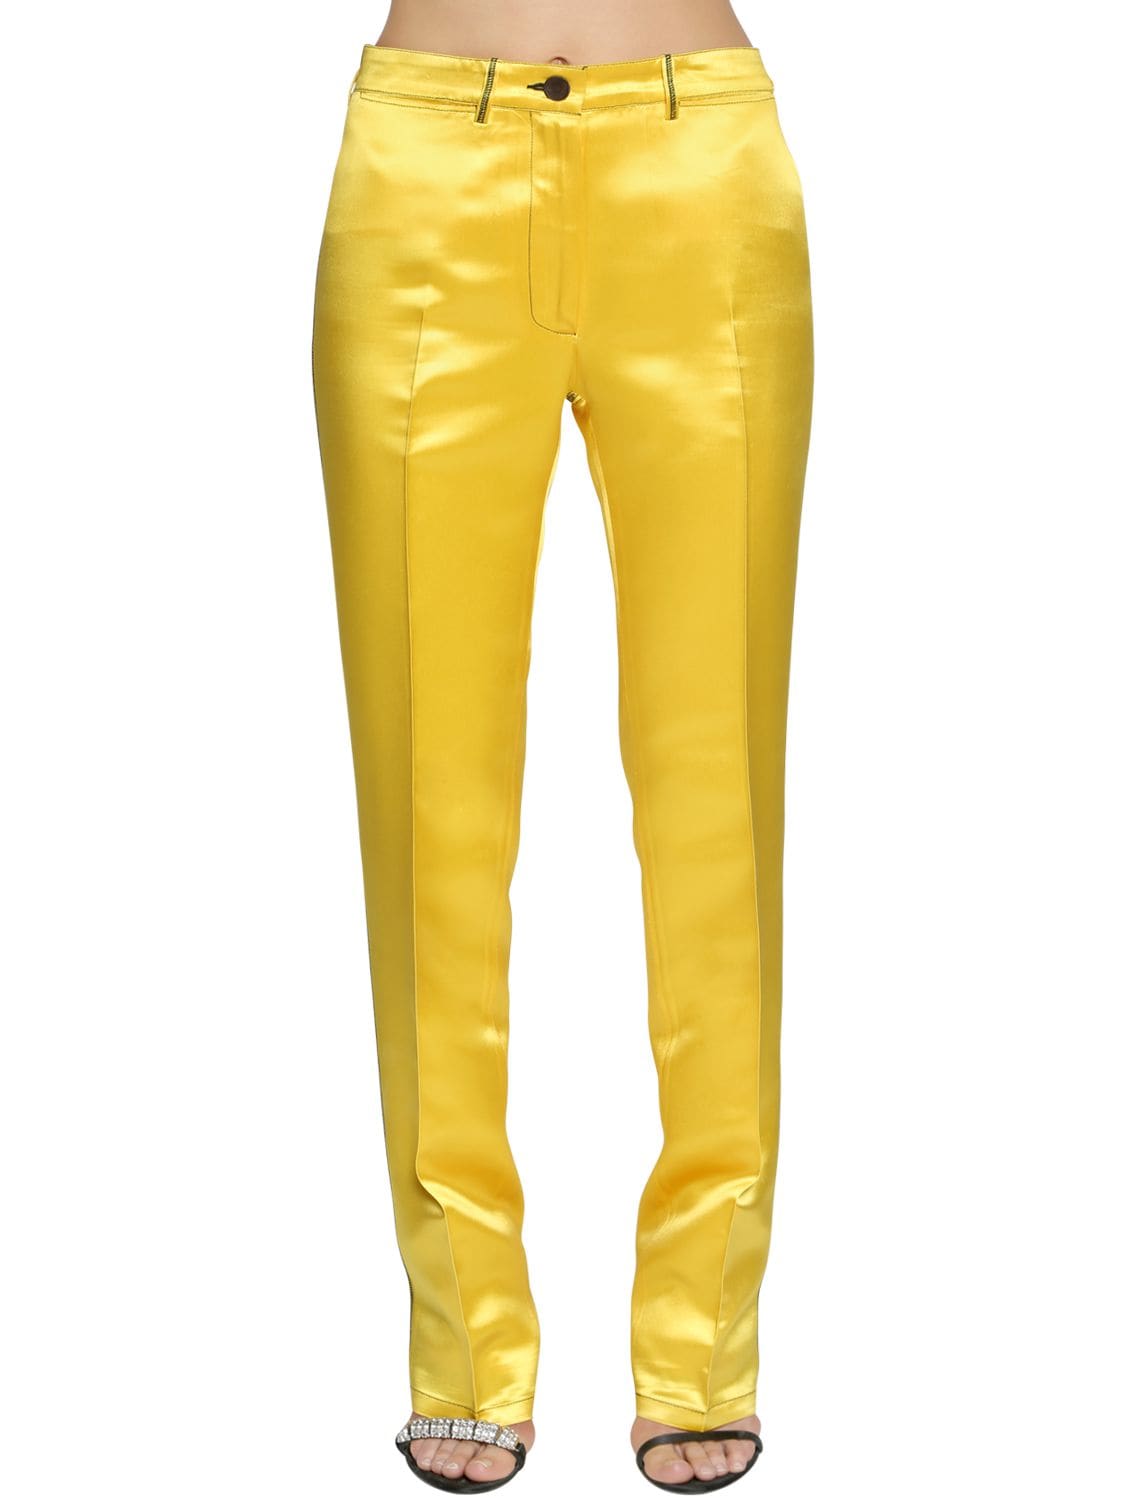 calvin klein yellow pants